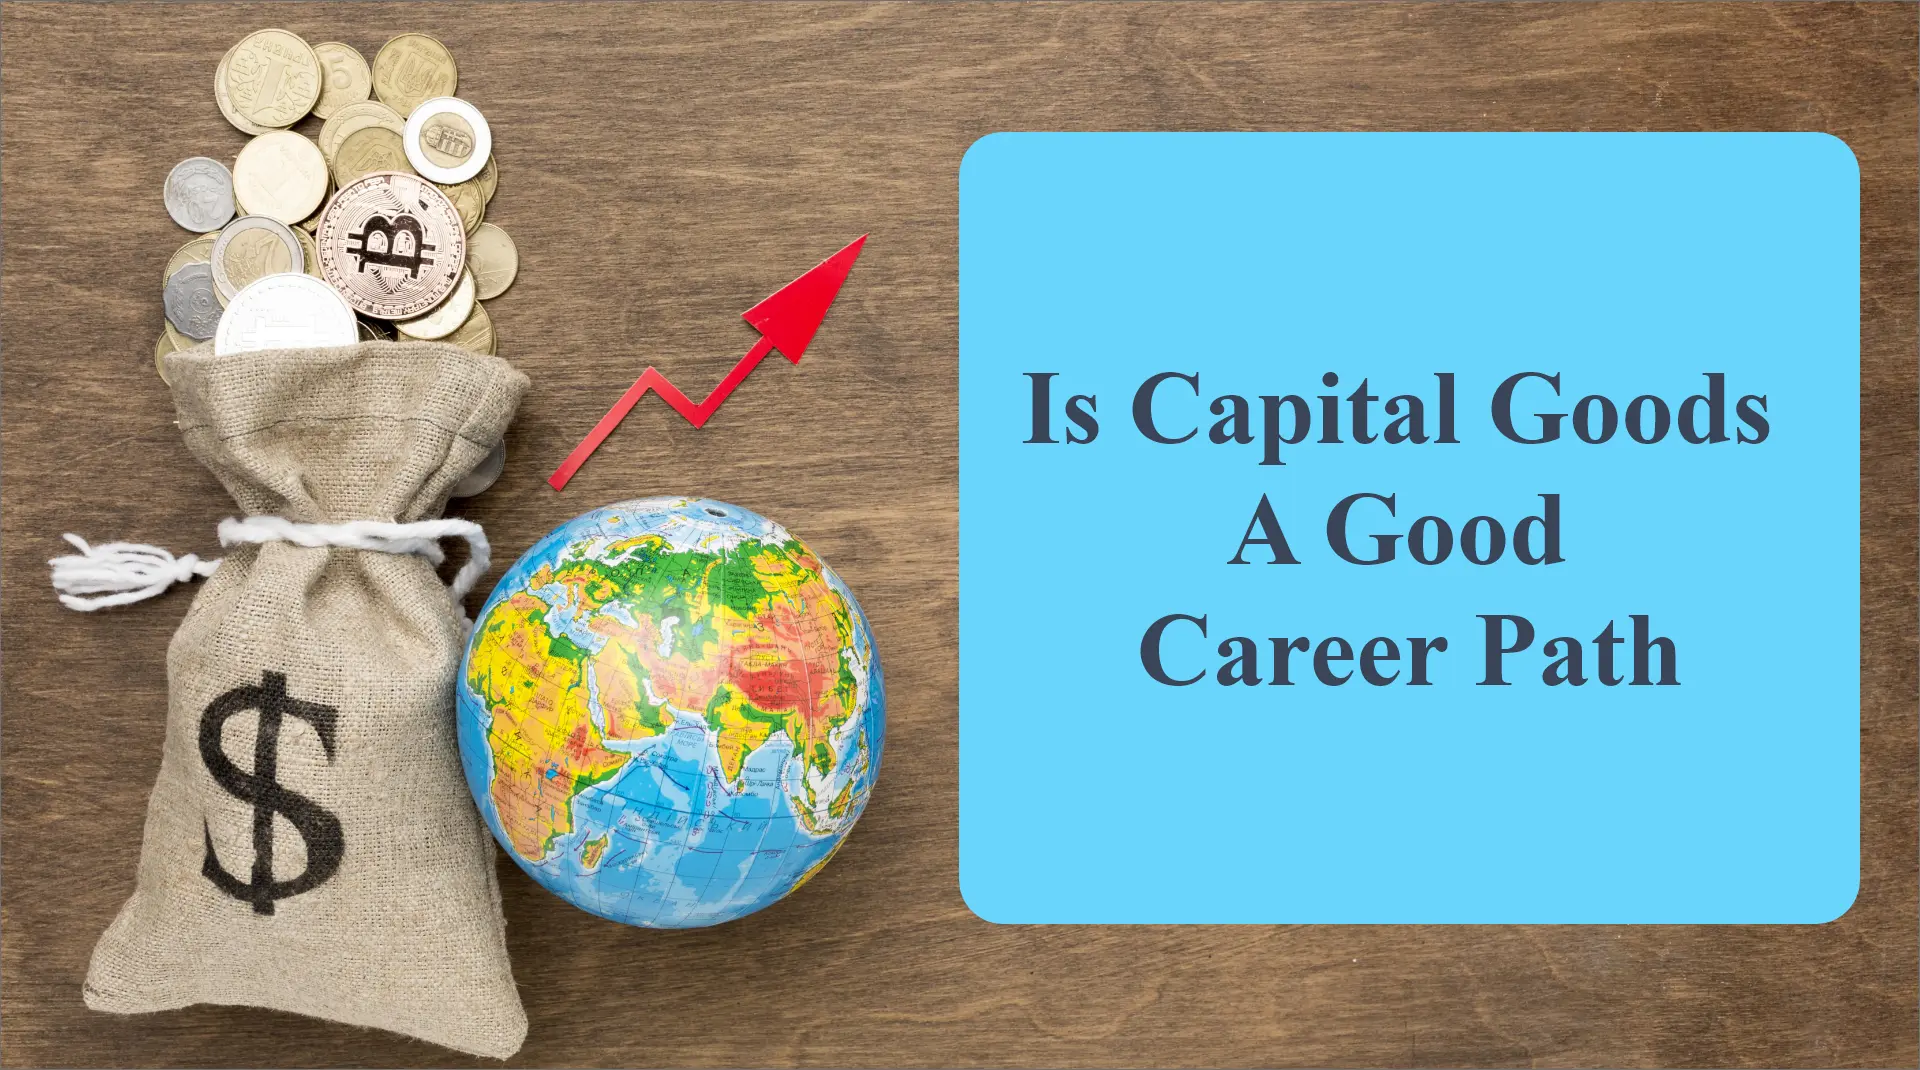 Explore Is Capital Goods a Good Career Path?